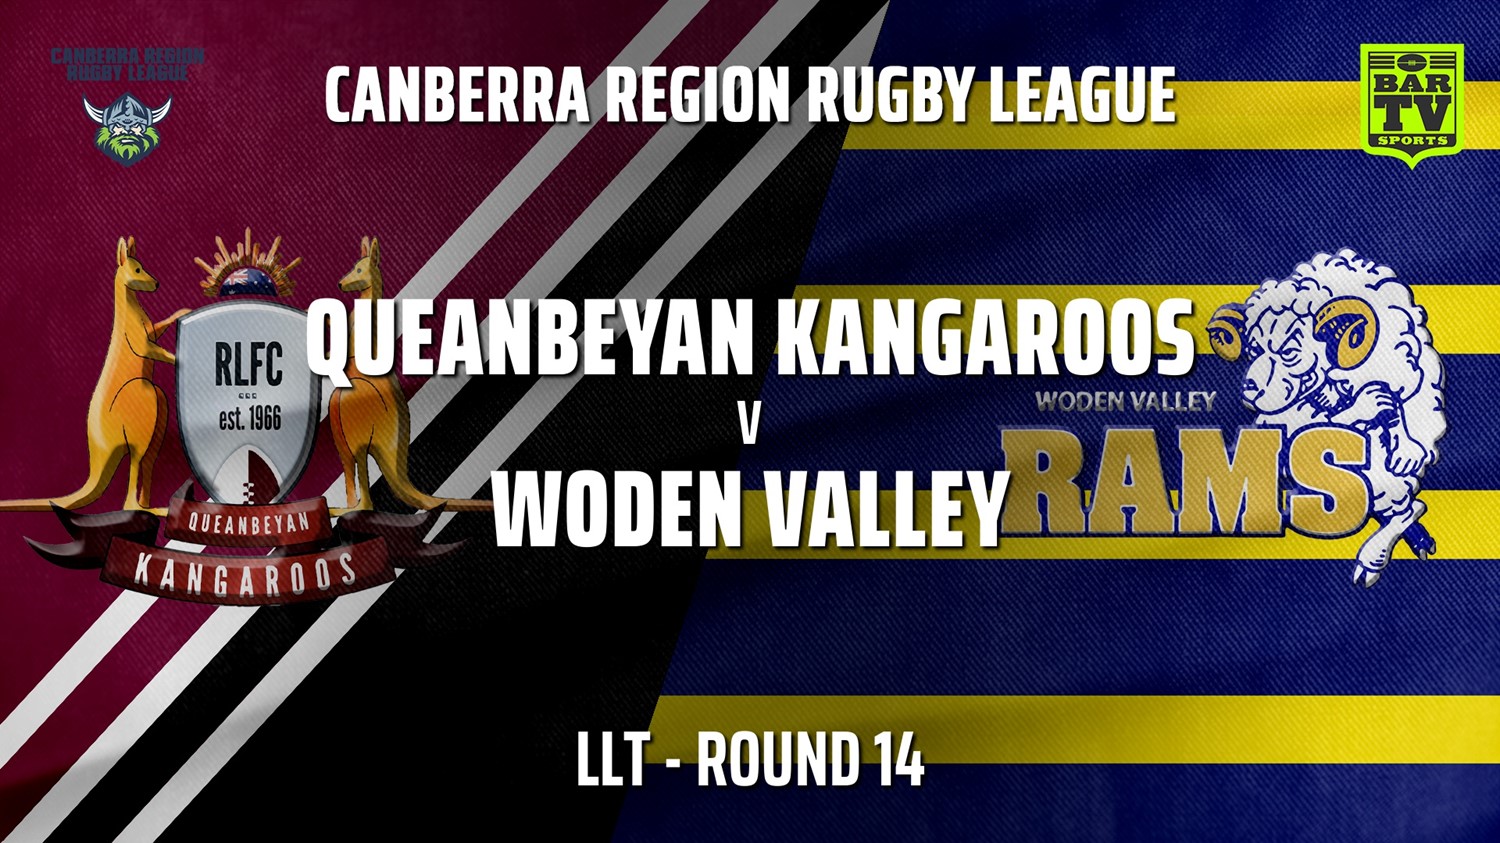 210731-Canberra Round 14 - LLT - Queanbeyan Kangaroos v Woden Valley Rams Slate Image